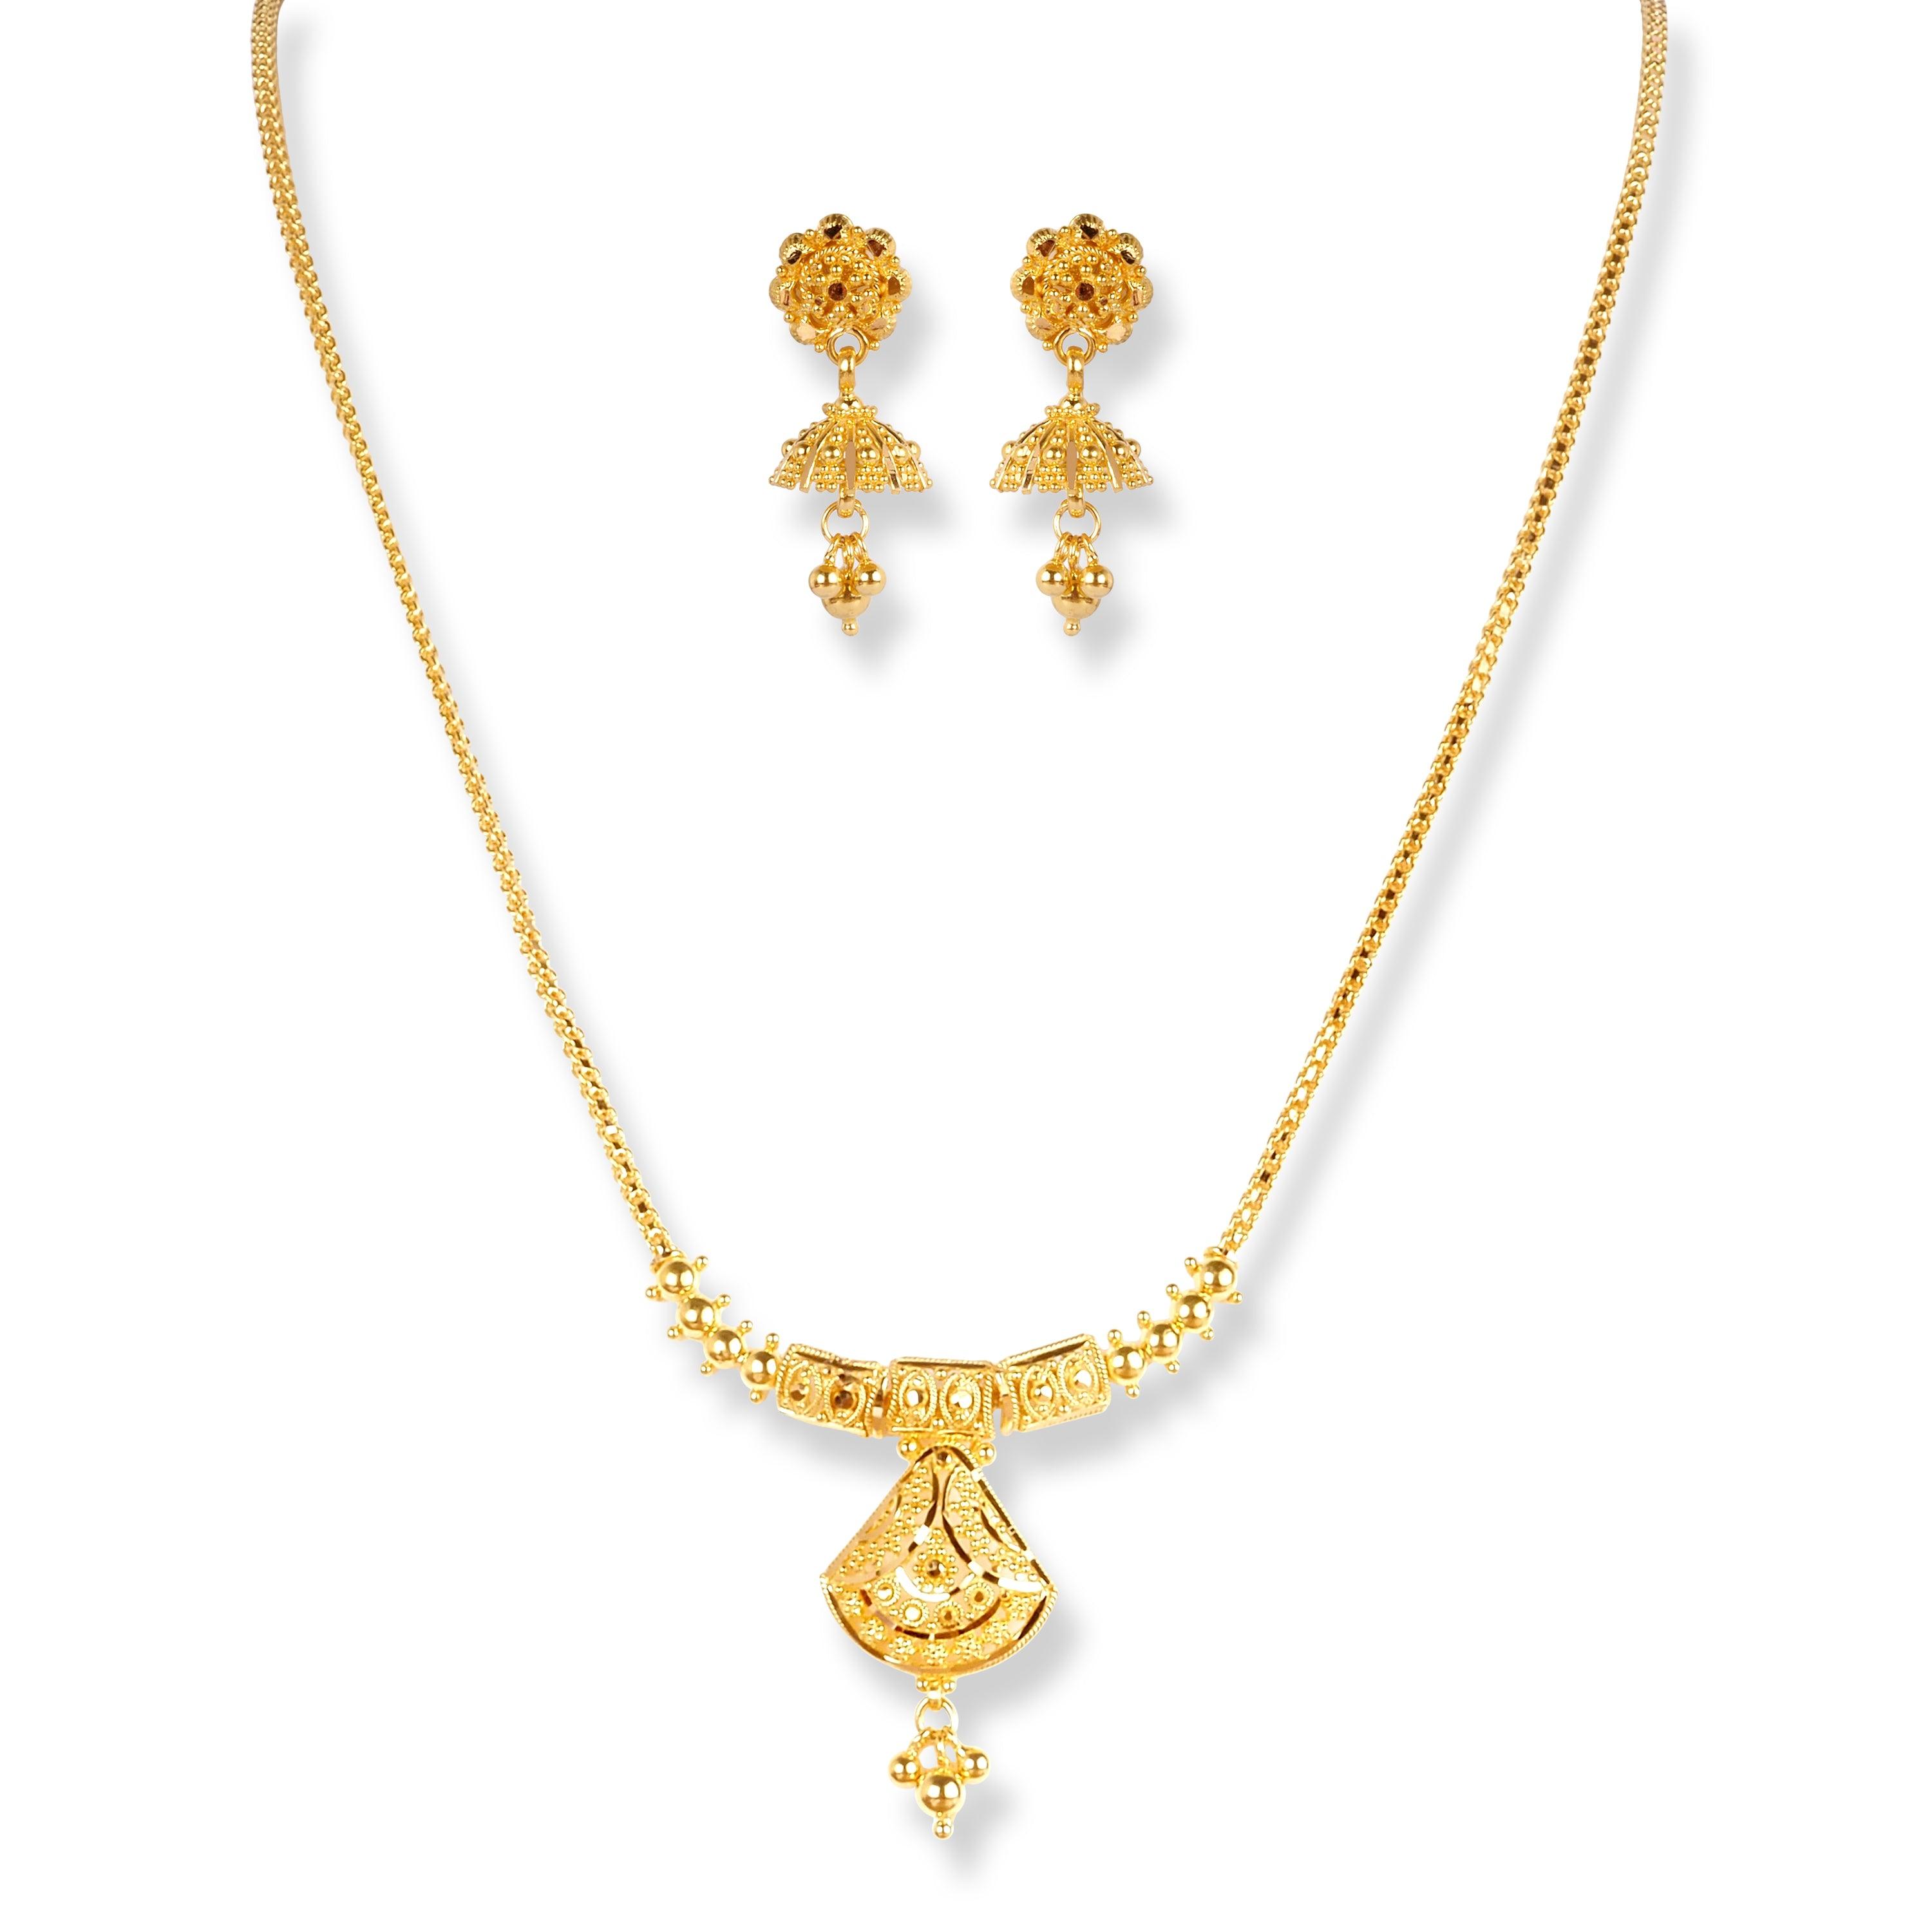 22ct Gold Set with Filigree Work N-7914 - Minar Jewellers